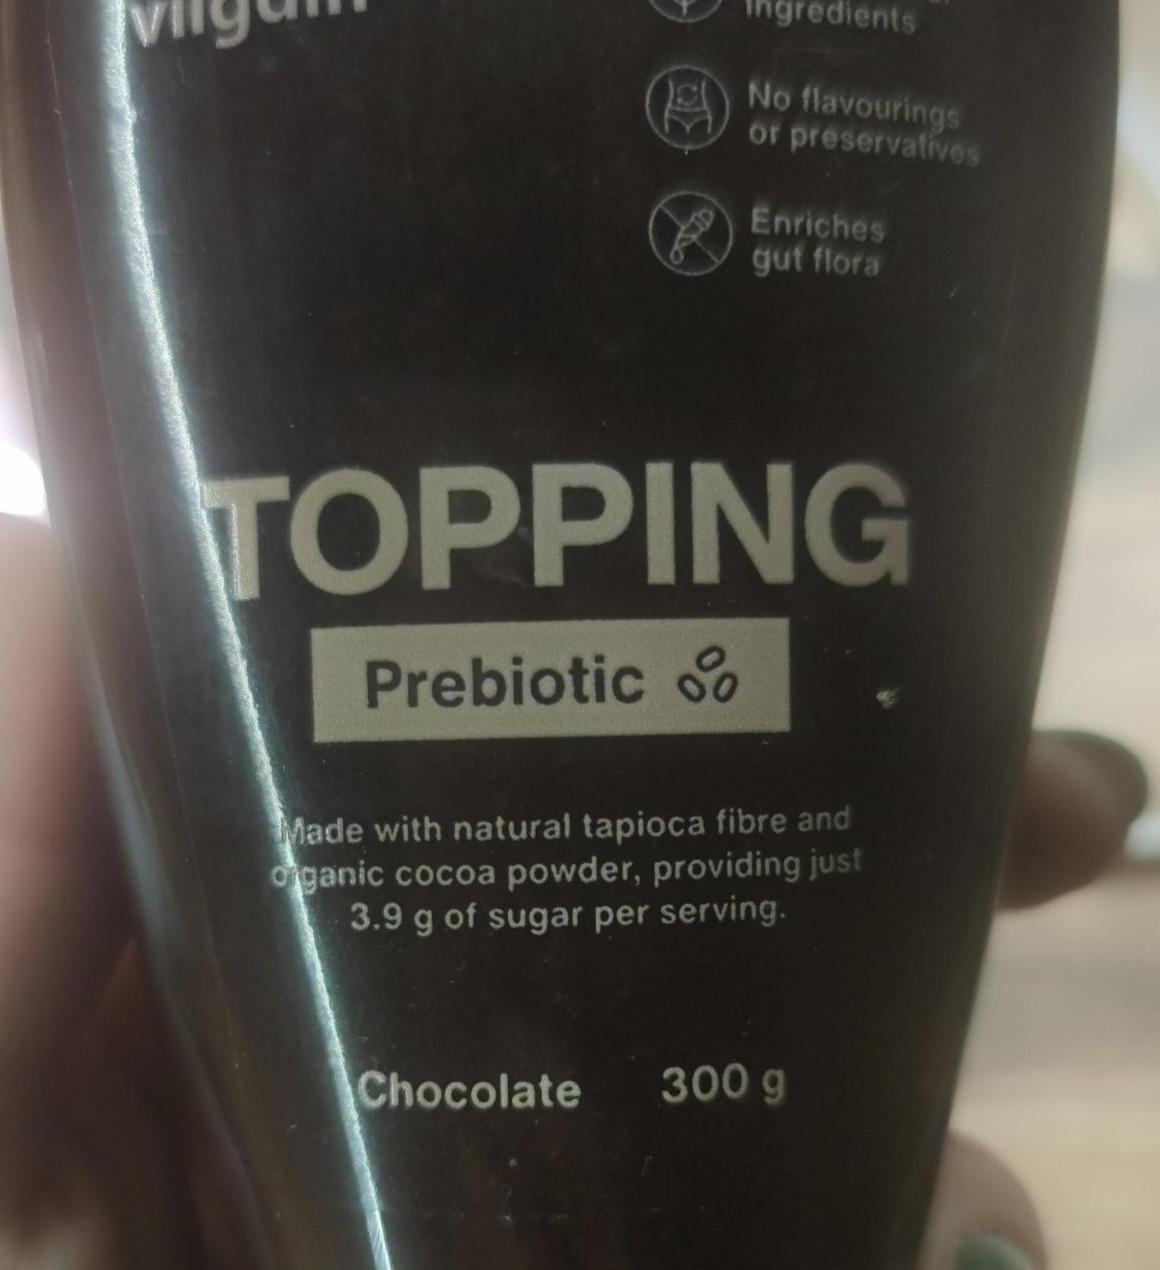 Fotografie - Topping Prebiotic Chocolate Vilgain